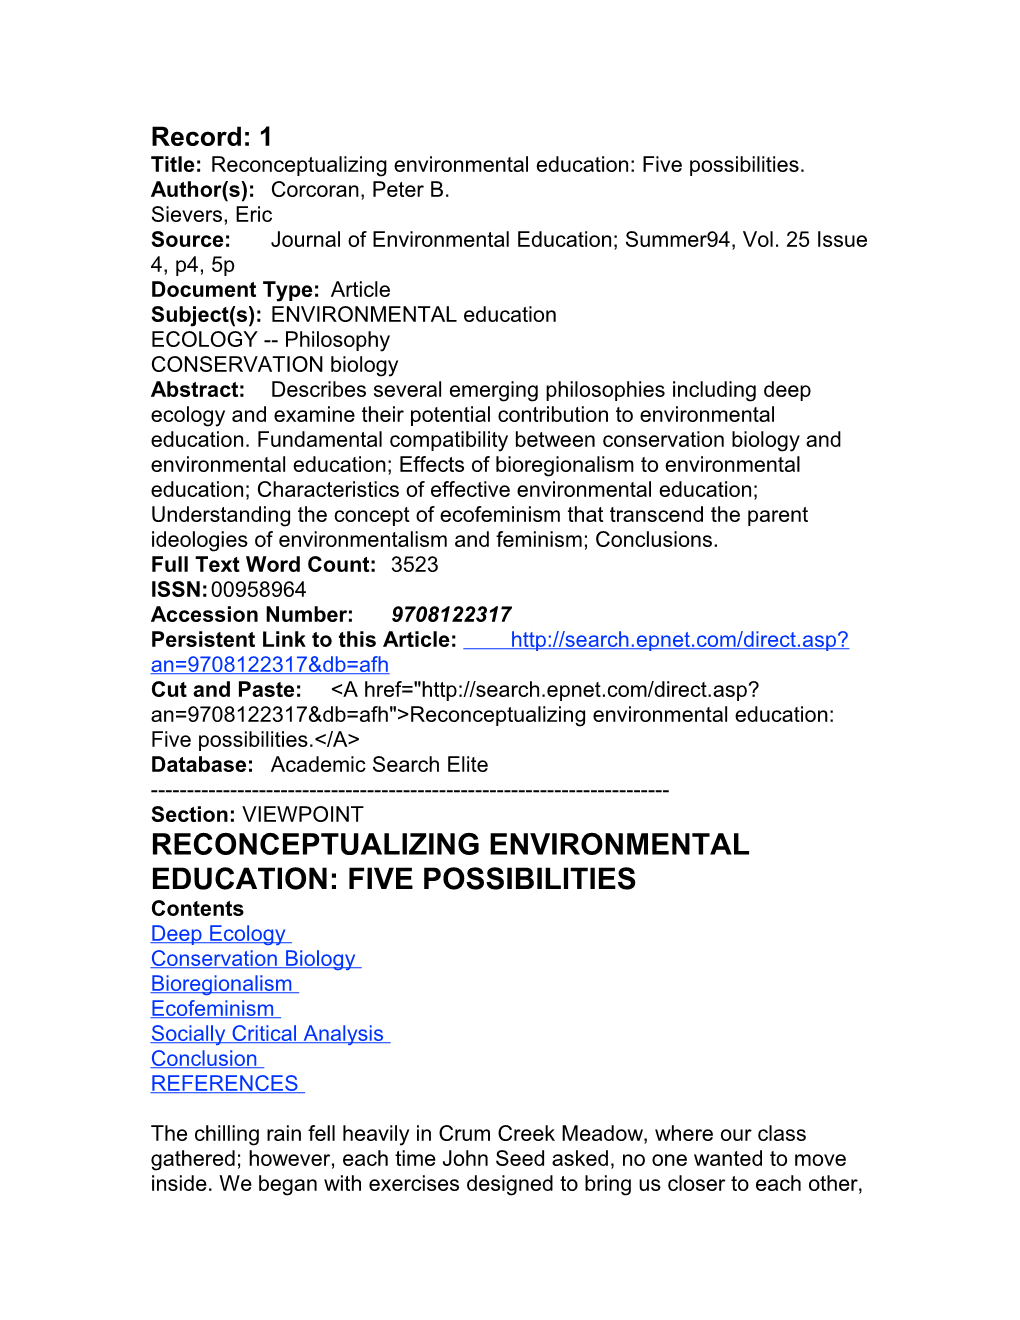 Title: Reconceptualizing Environmental Education: Five Possibilities